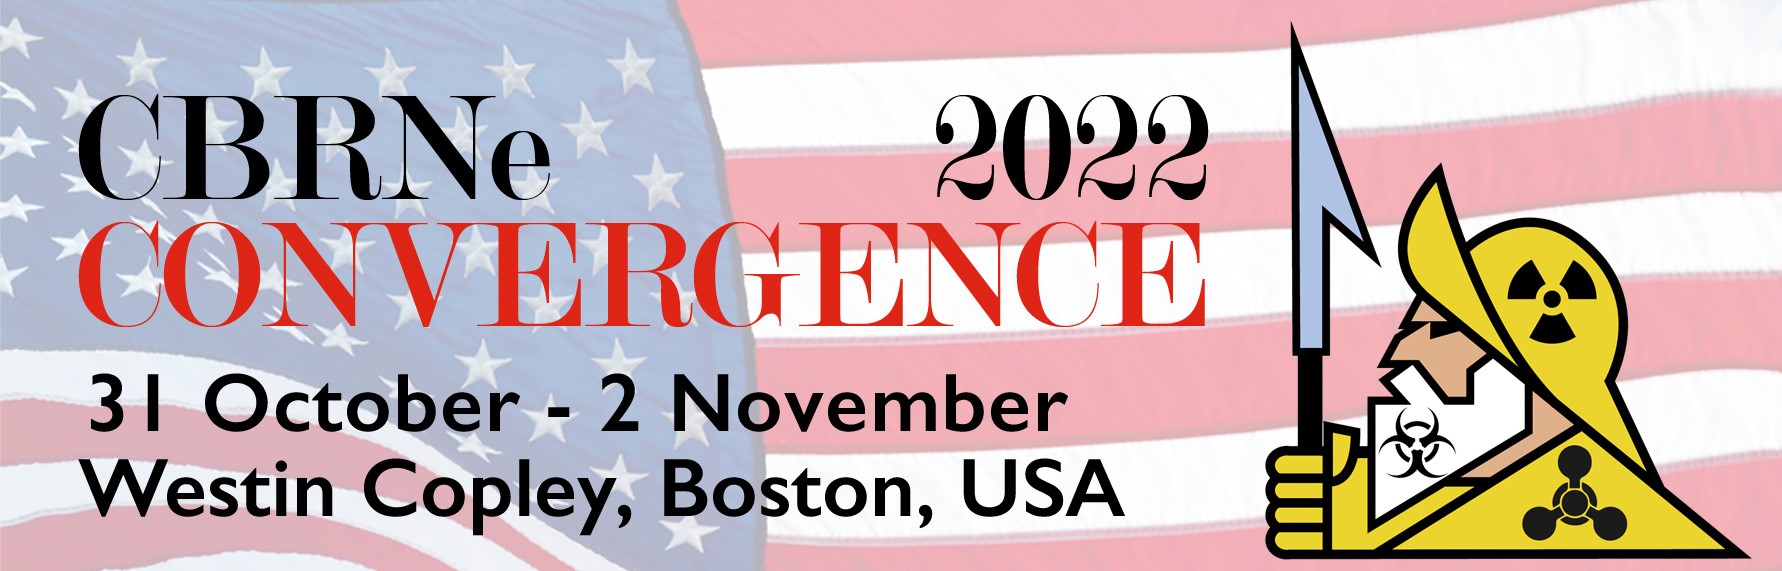 Convergence 2022 logo-1